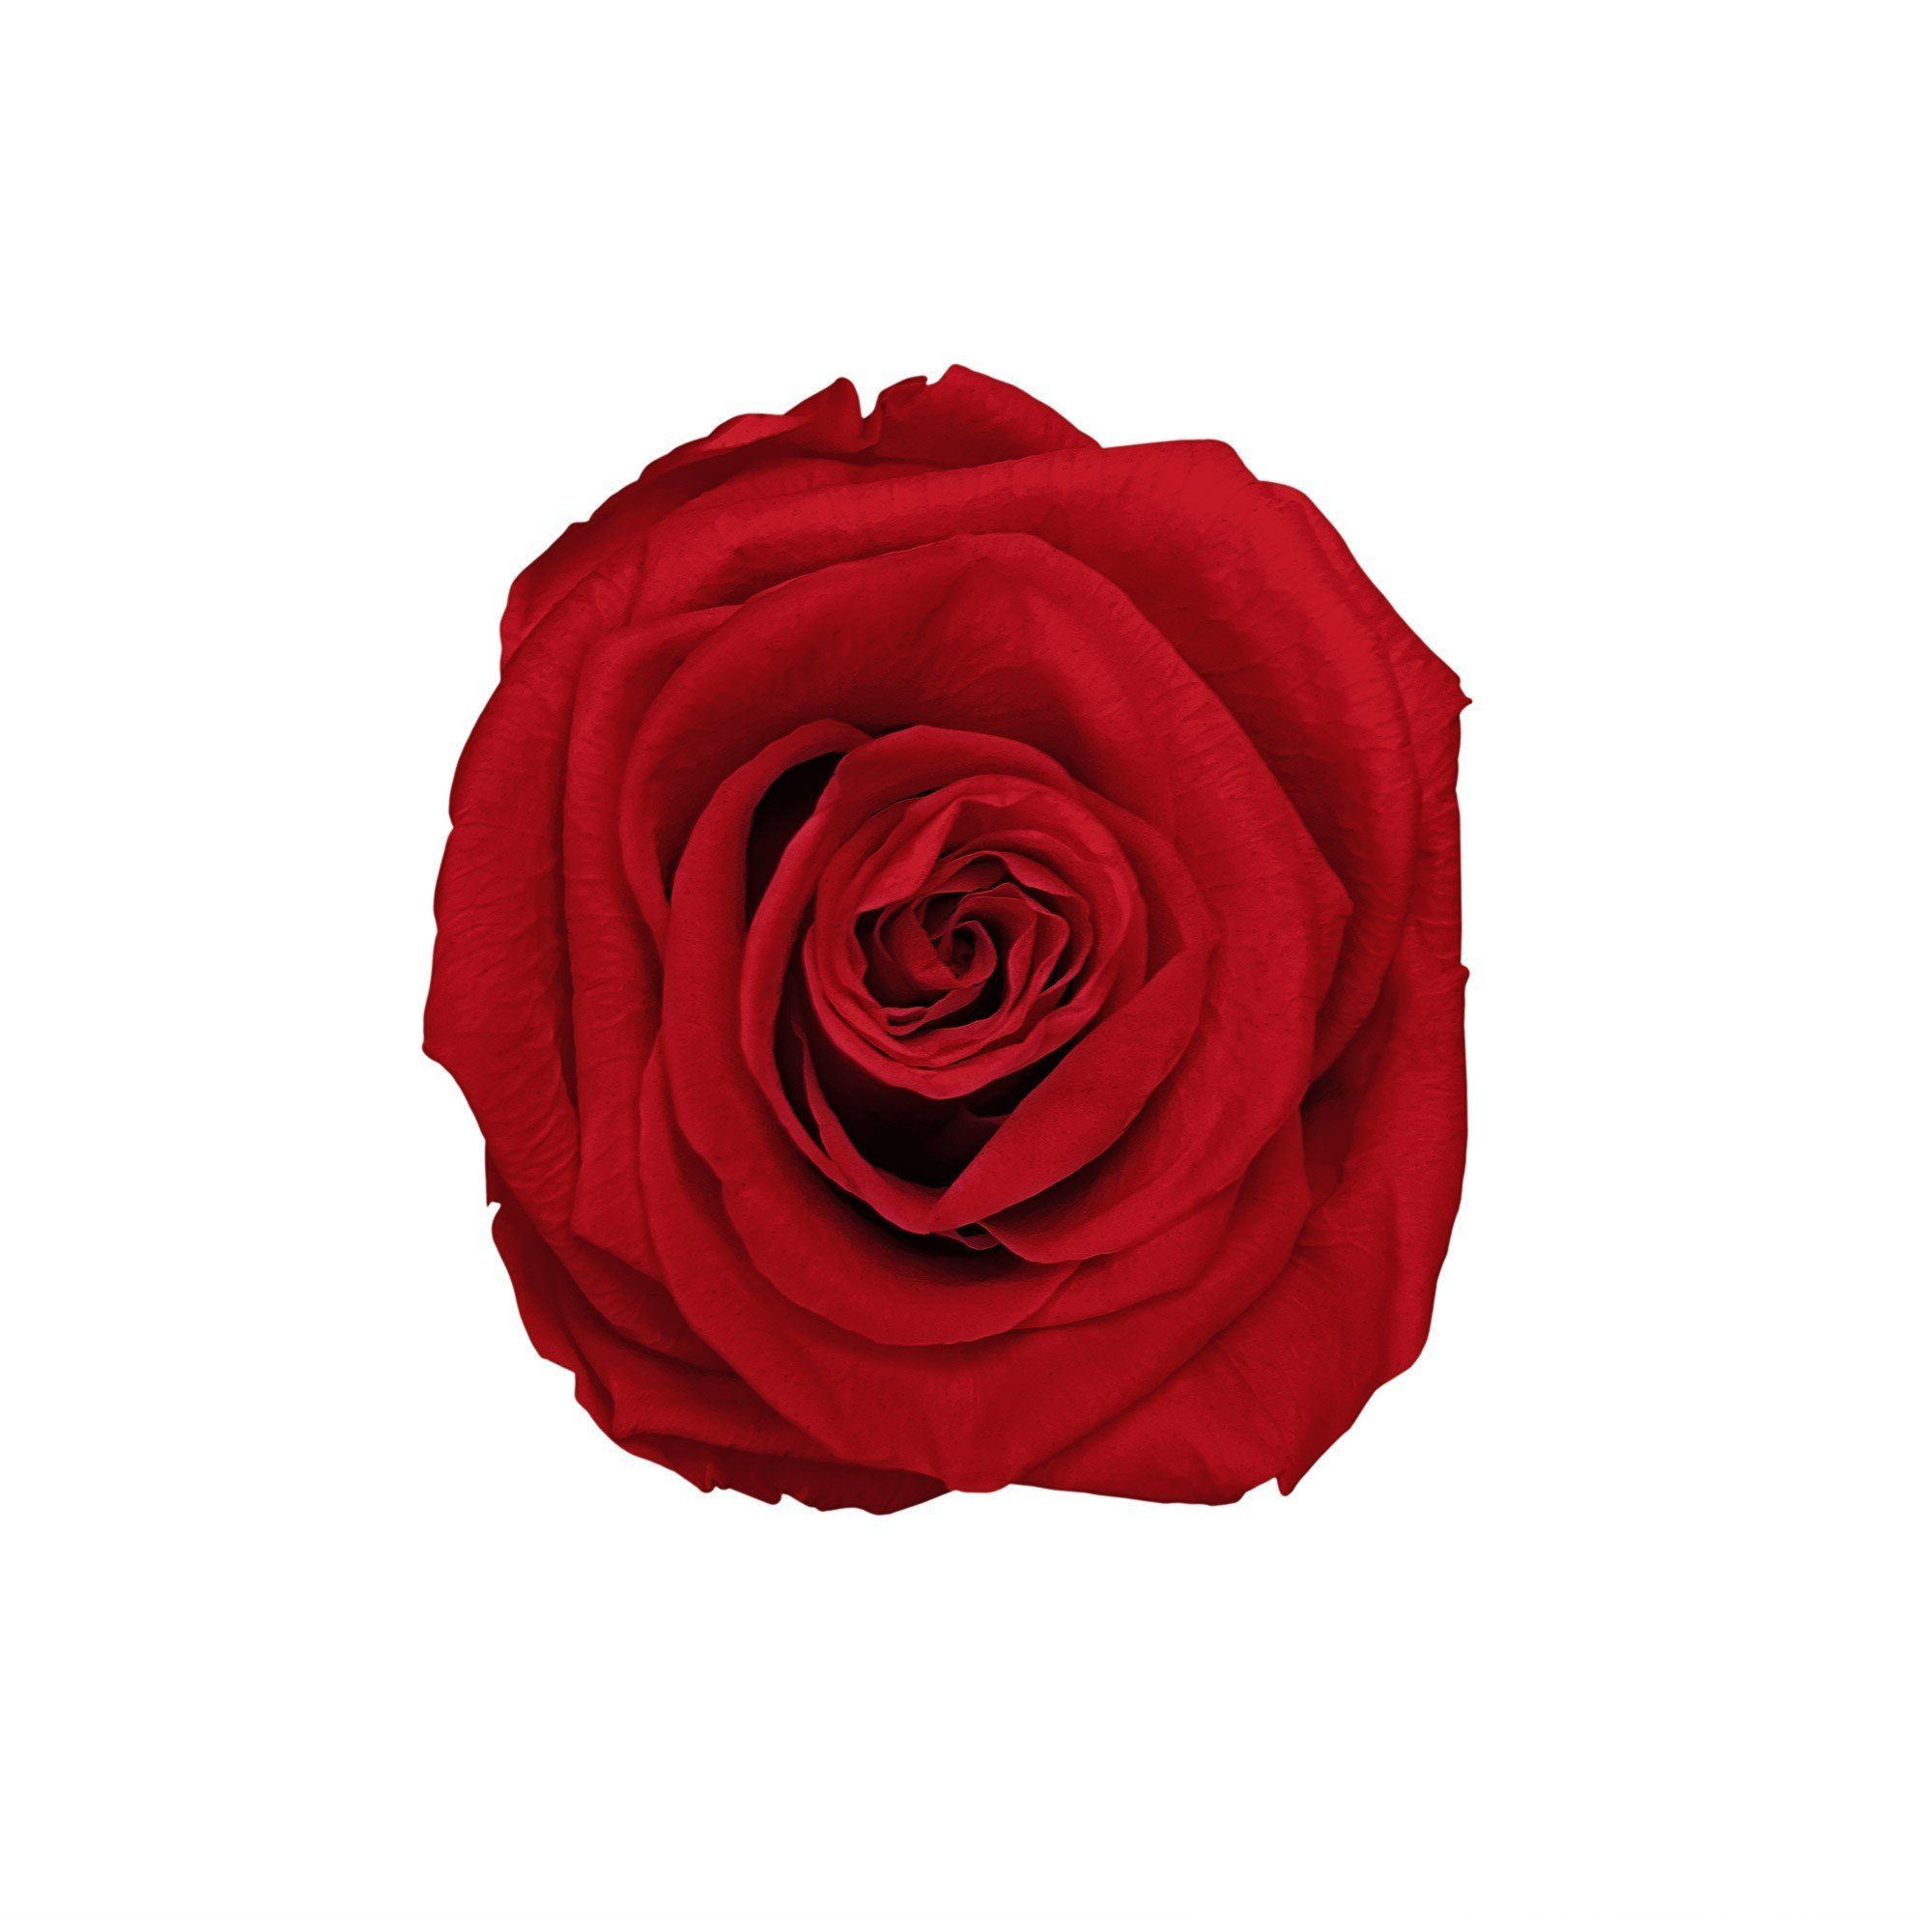 Echte, Rose, Raul Holy I konservierte I 1er Rose mit Richter 3 Infinity Infinity I 9 duftende in Jahre Blumen cm Kunstblume by Red Heritage haltbar Rosenbox weiß Höhe Runde Flowers,